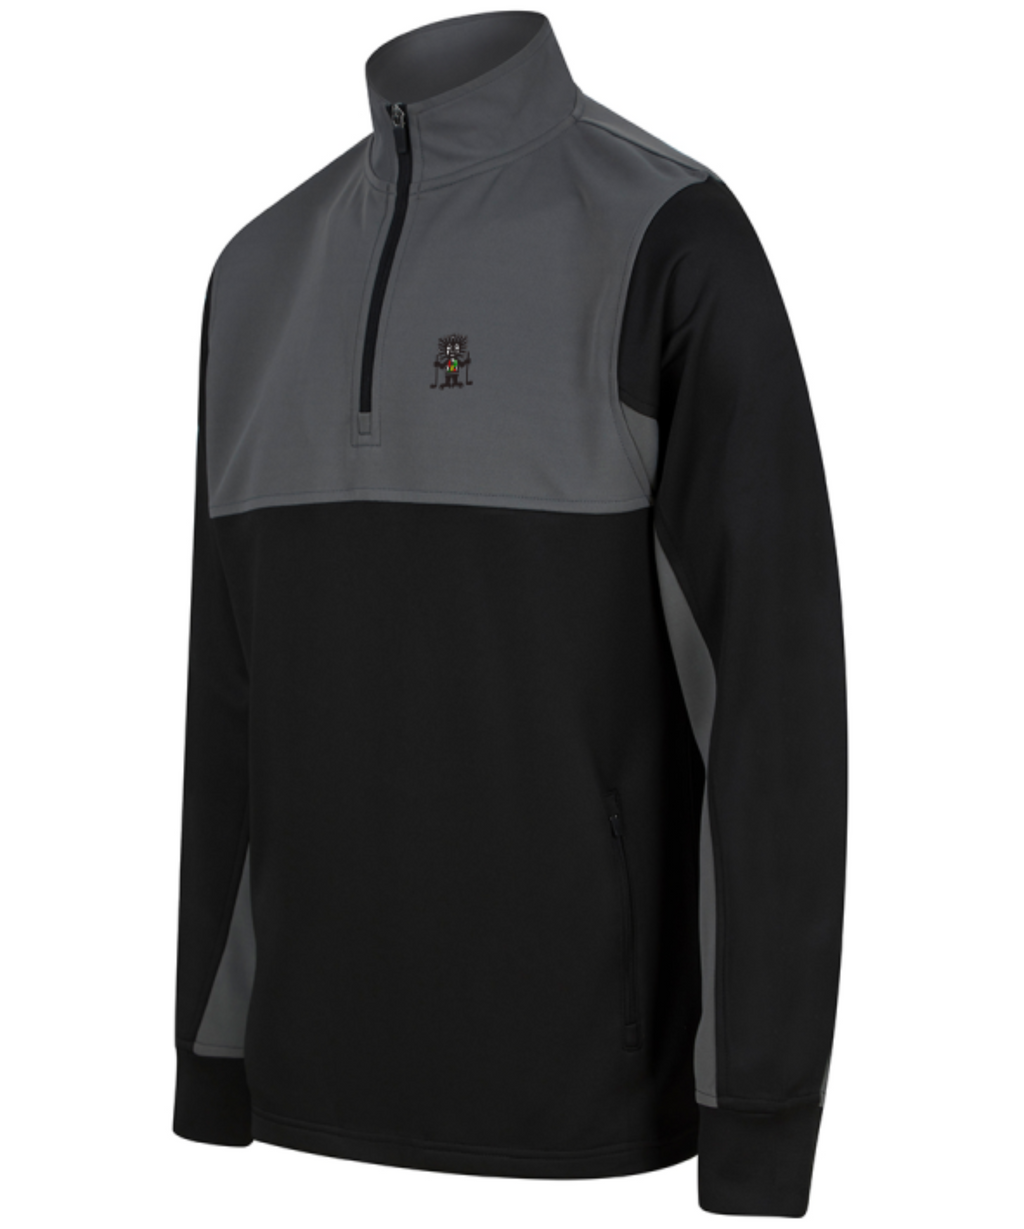 golf god clothing classic black/gunmetal mid layer